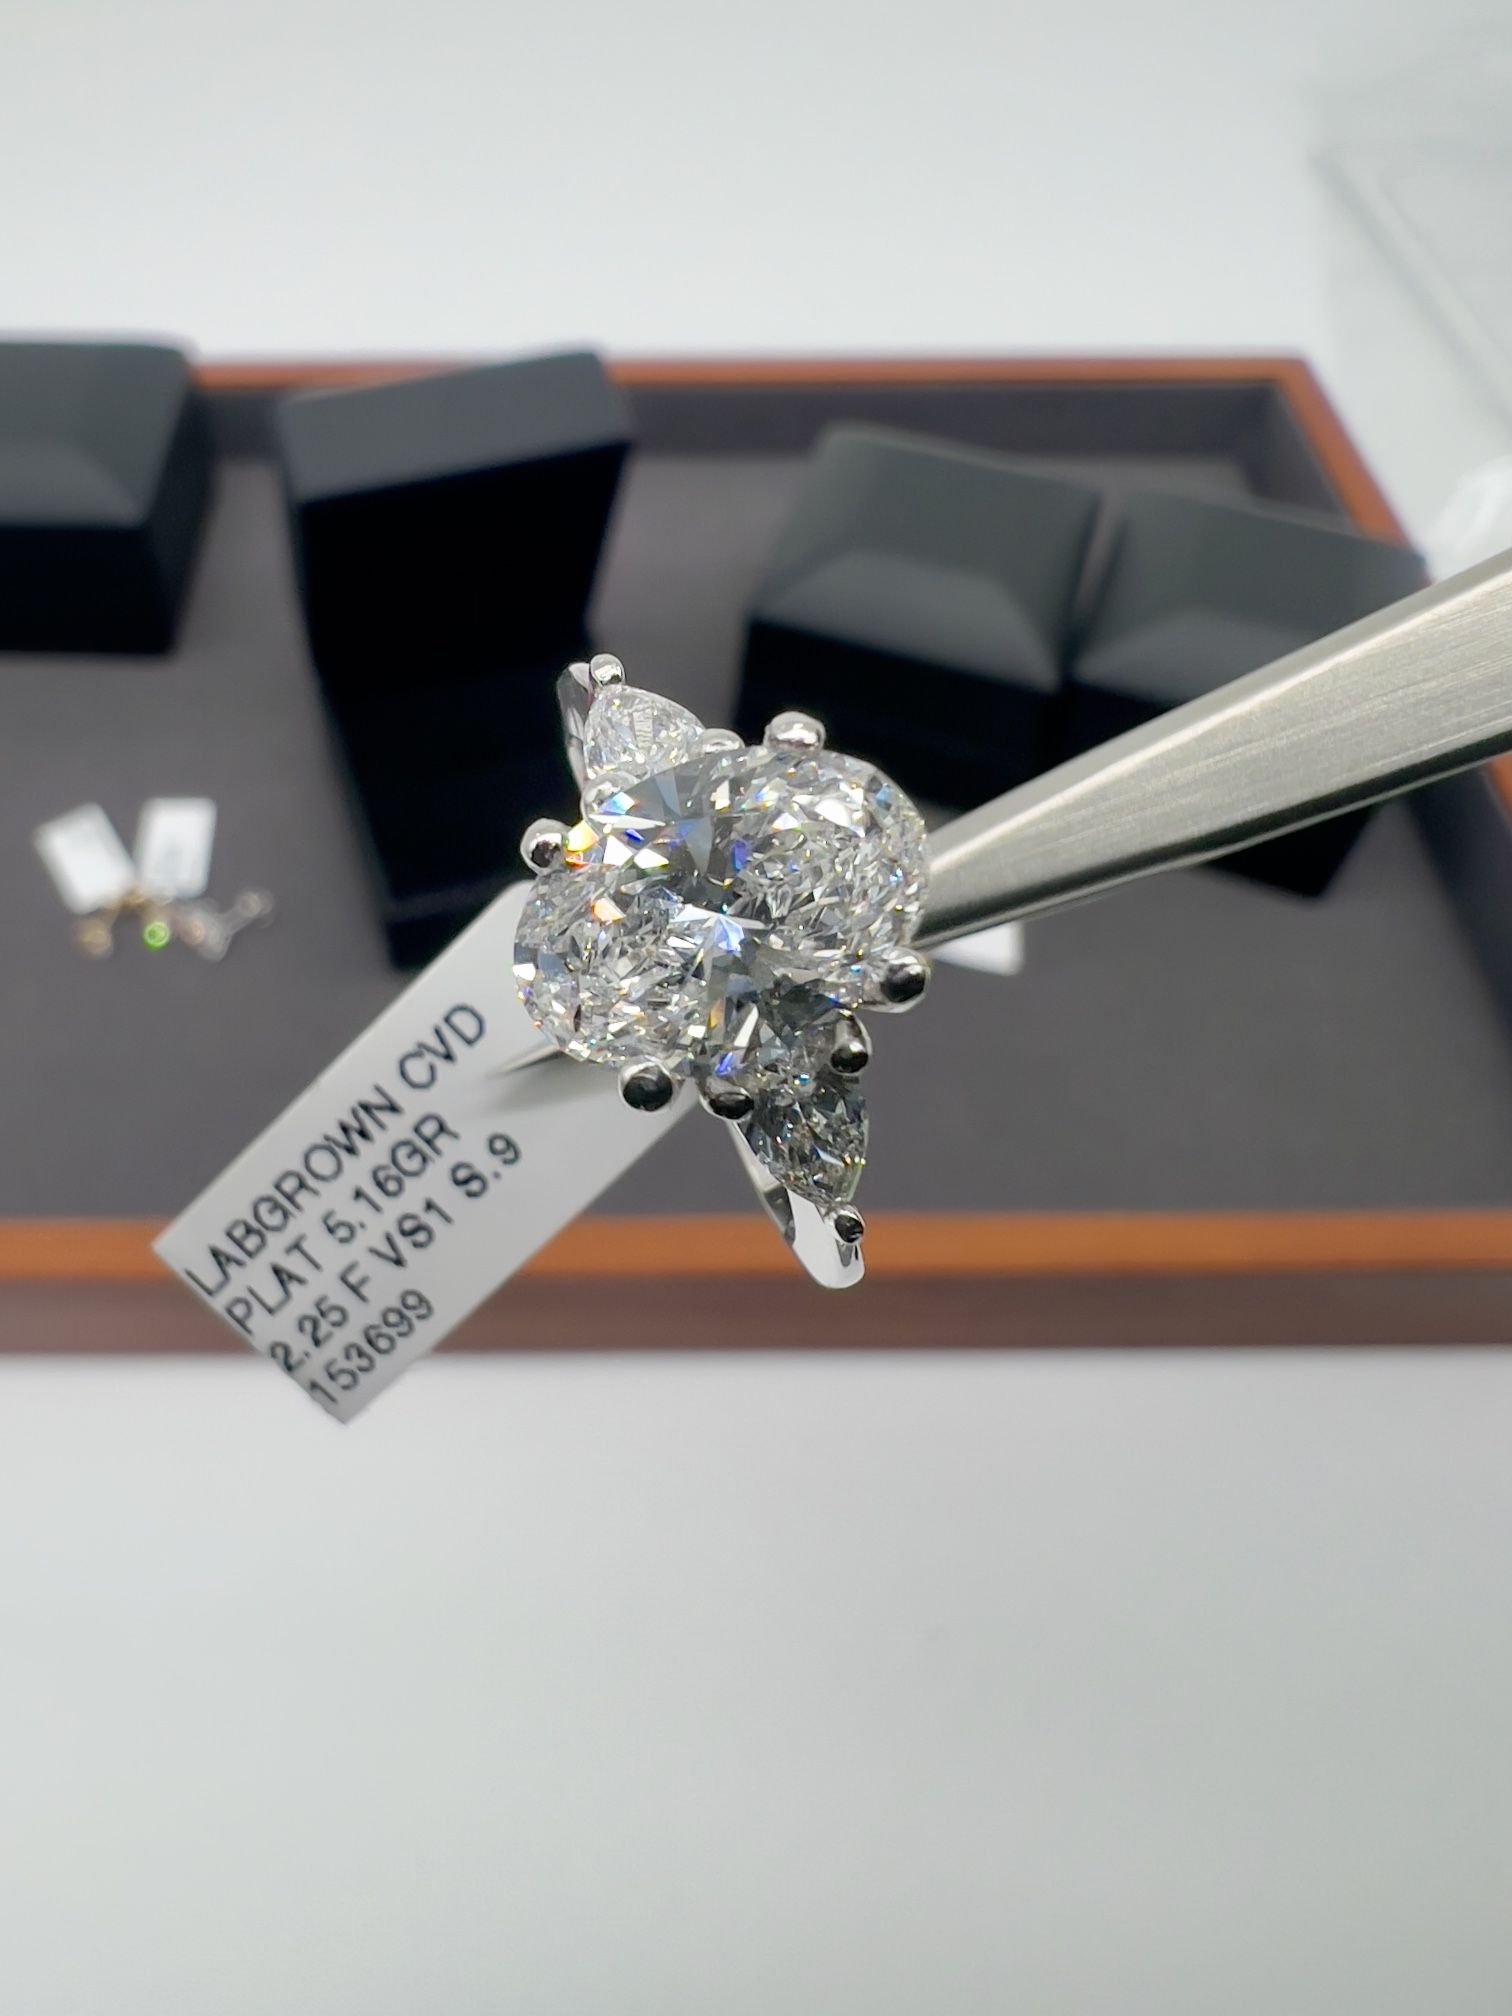 3.15 CTTW PLATINUM OVAL DIAMOND RING 💍 IGI CERTIFIED LAB CREATED DIAMOND 💎